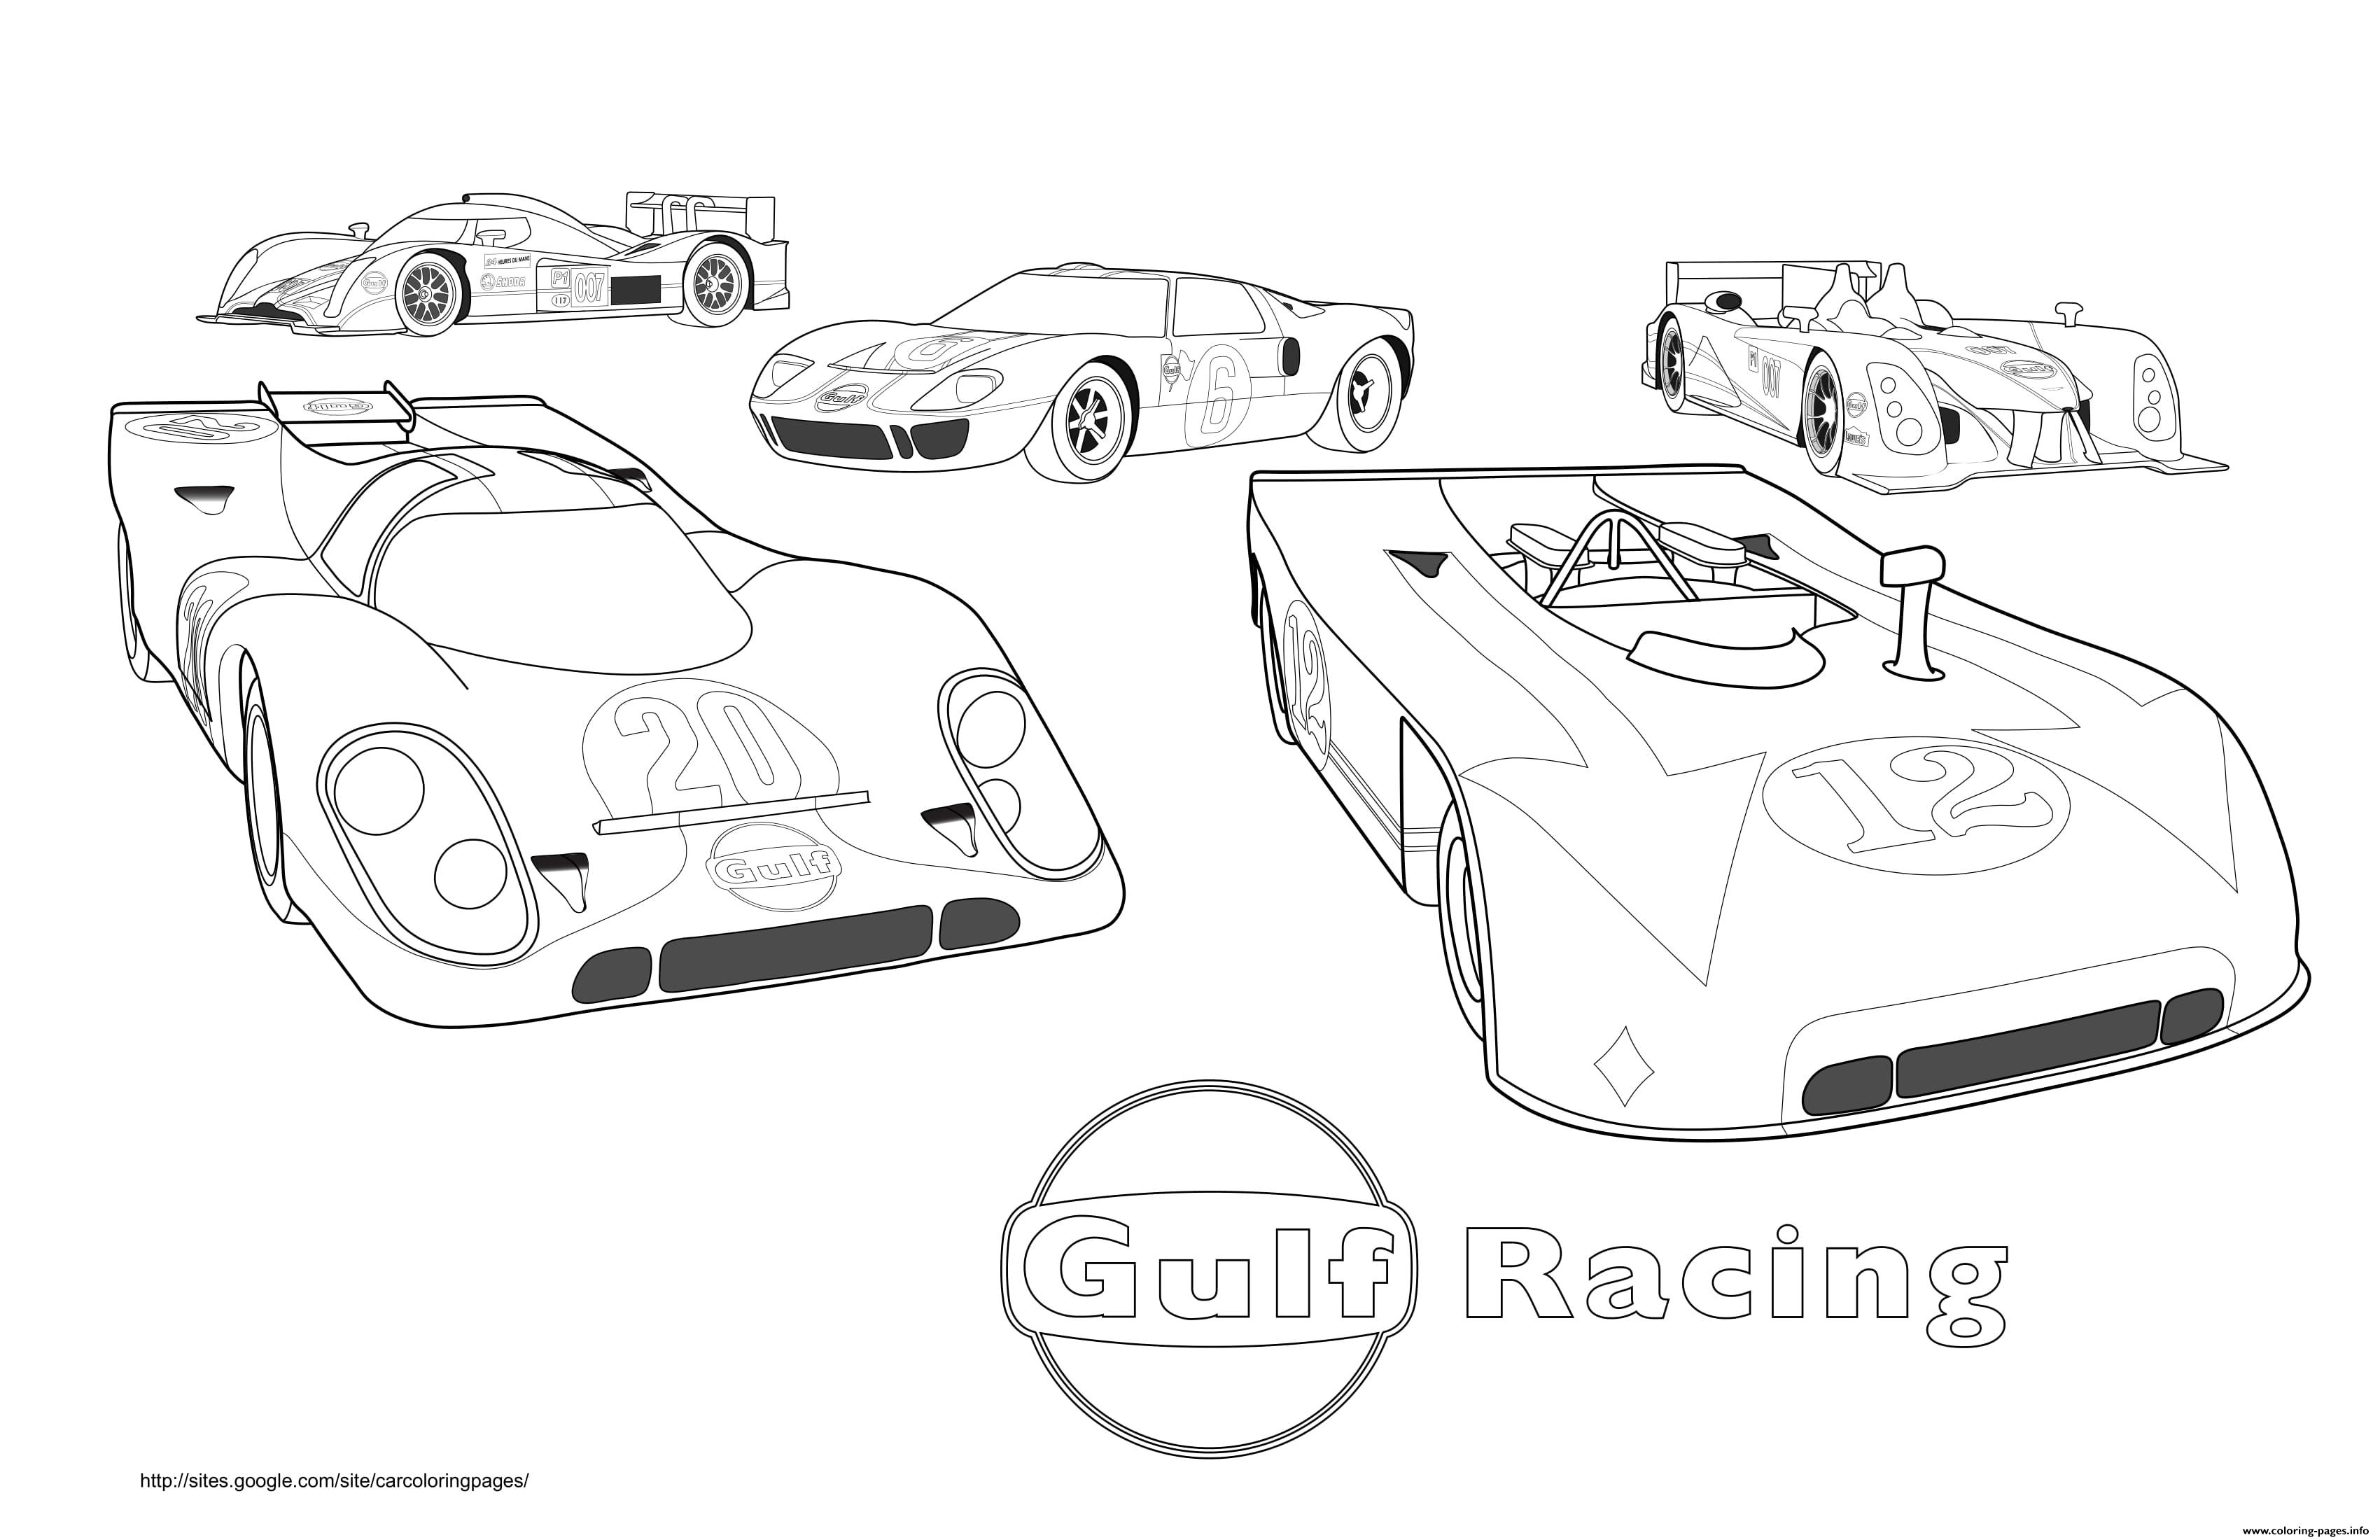 Gulf Racing coloring